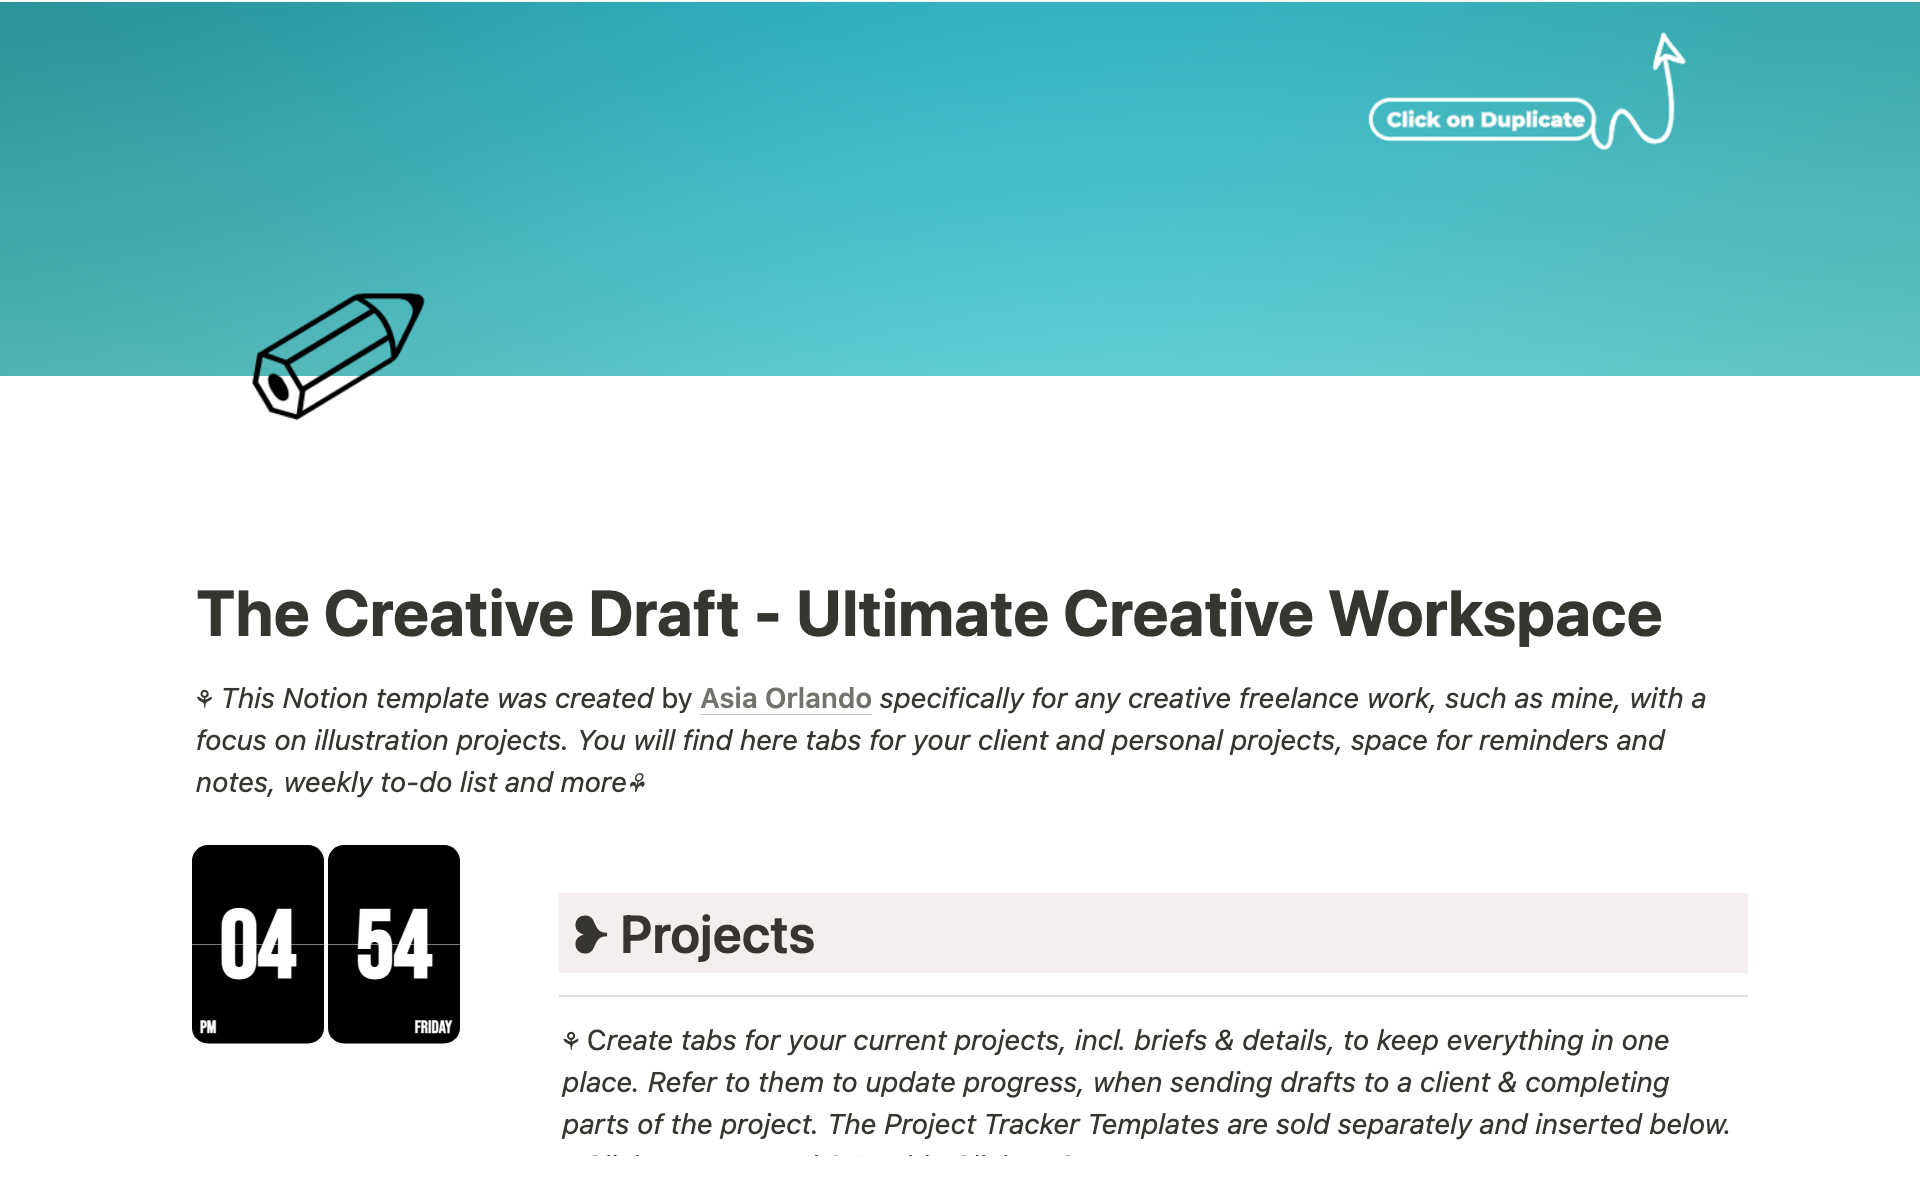 The Creative Draft - Ultimate Creative Workspace님의 템플릿 미리보기